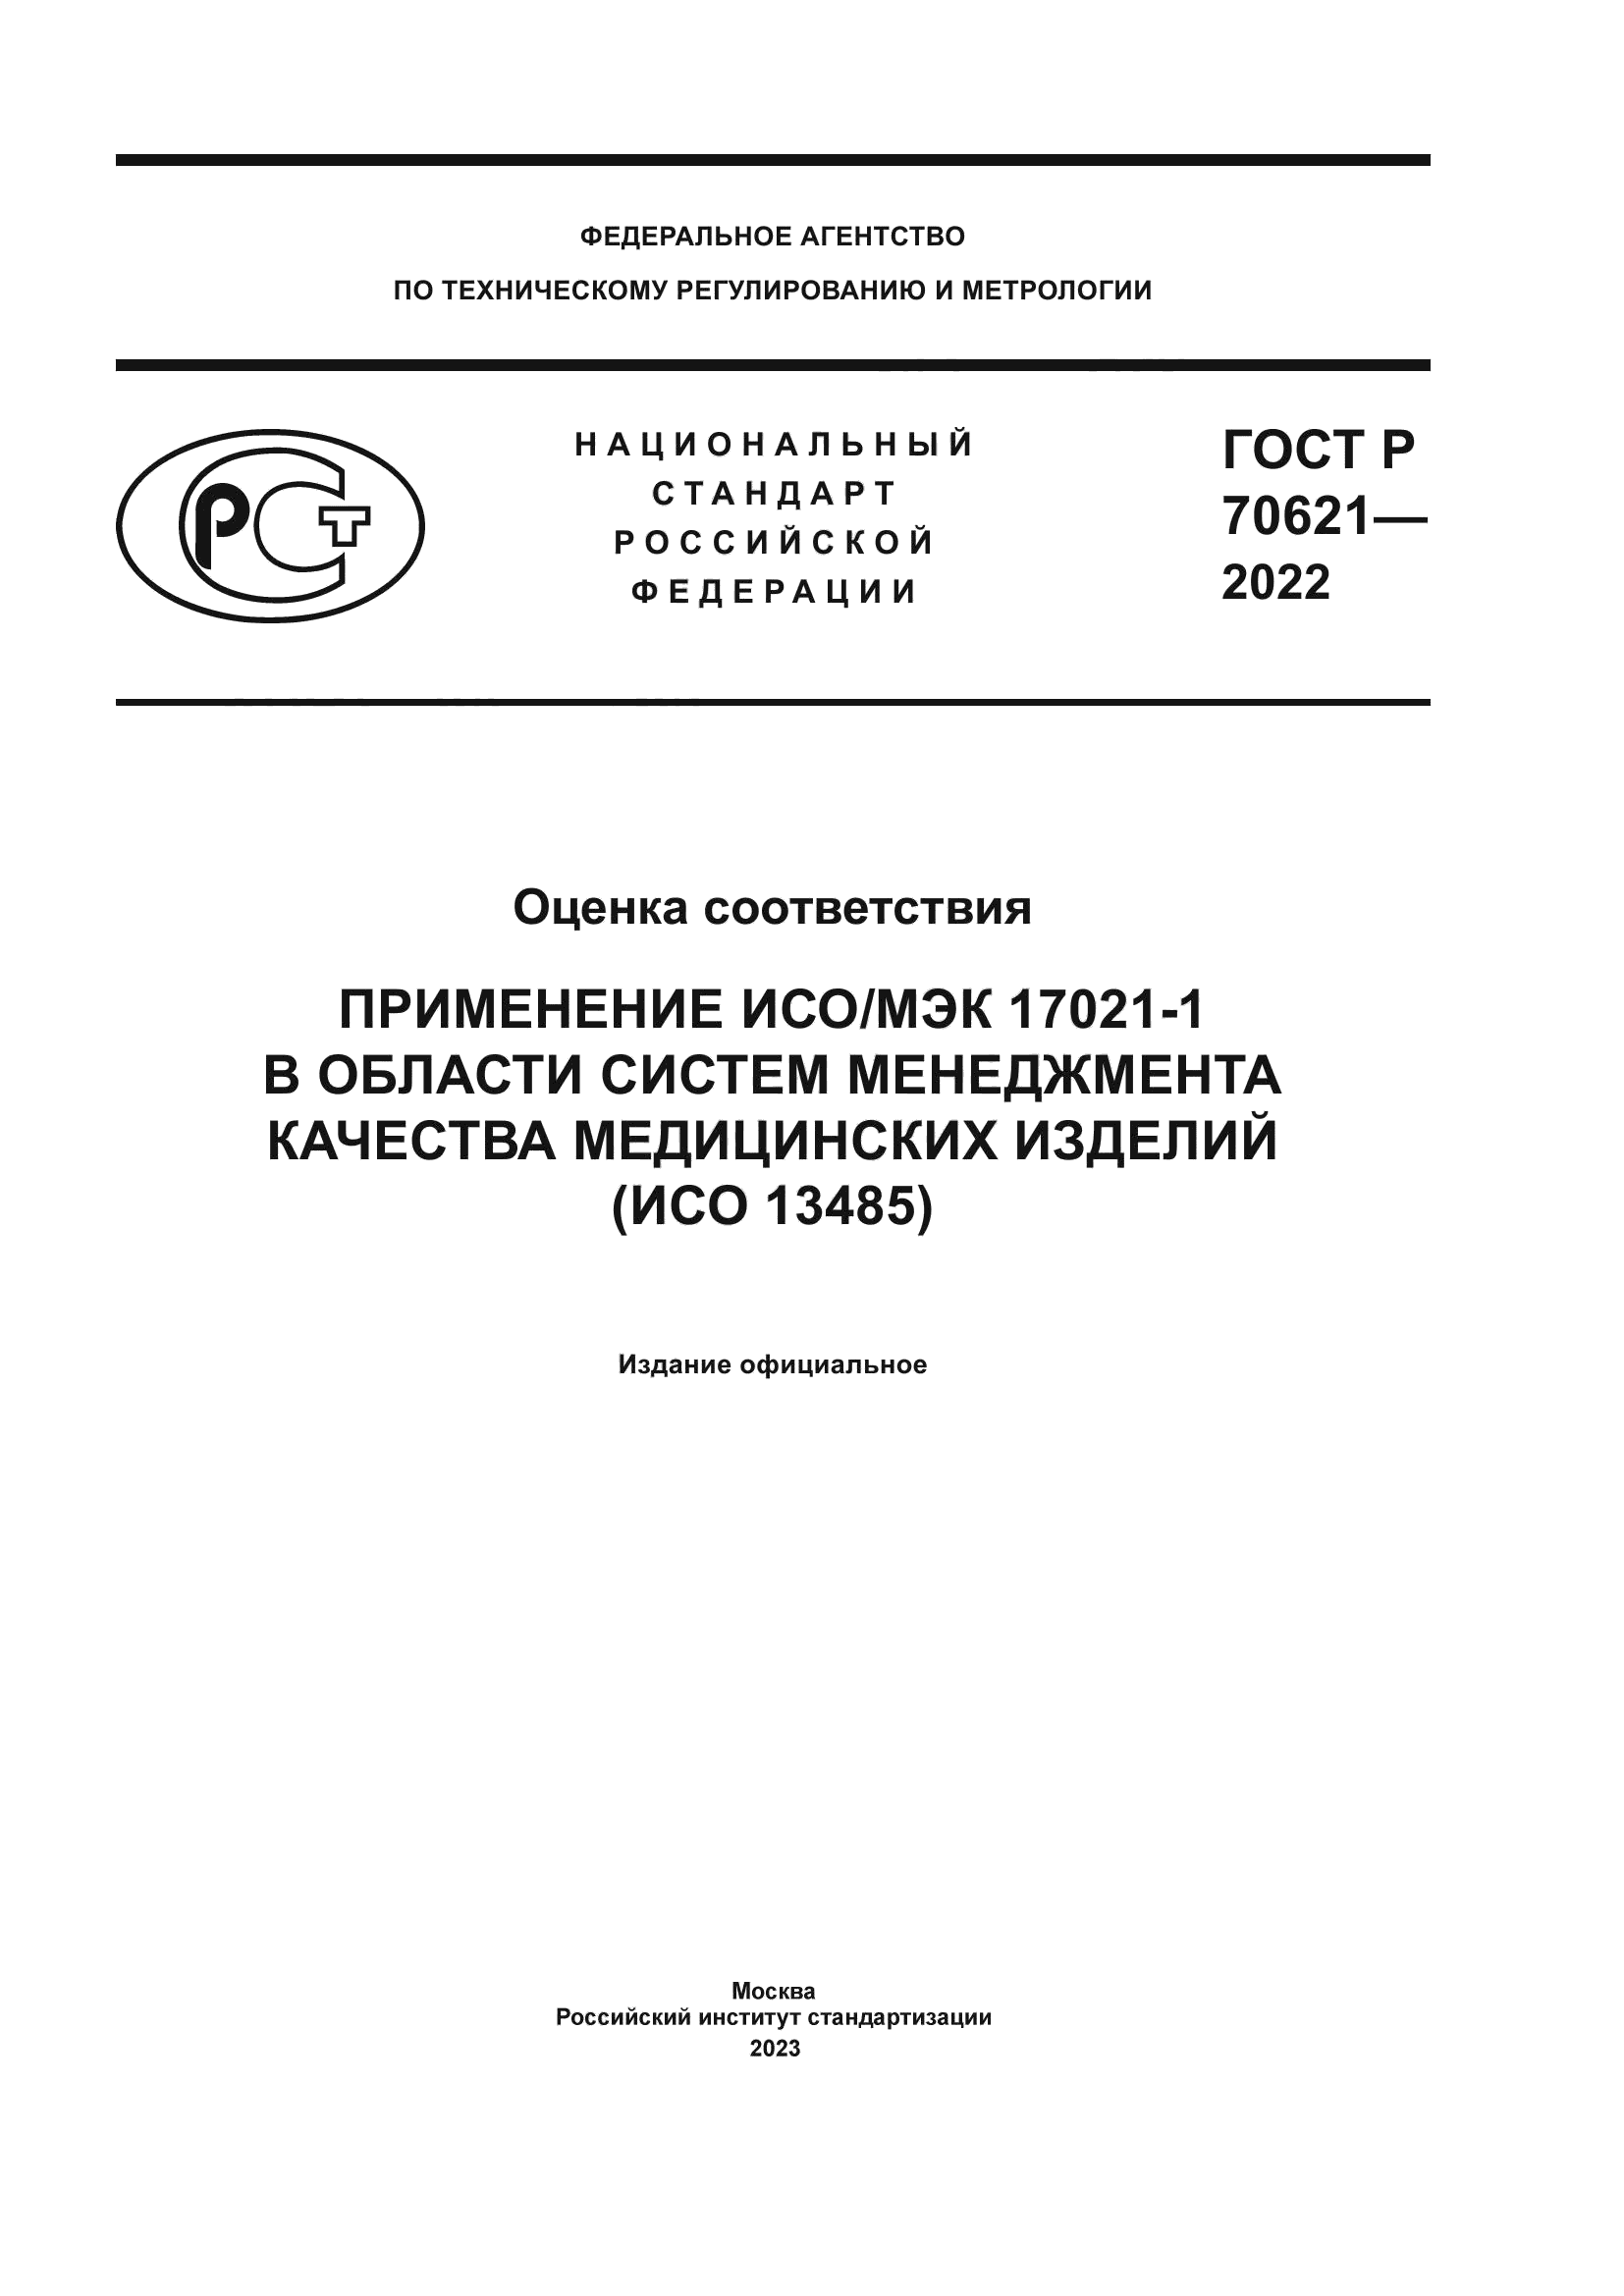 ГОСТ Р 70621-2022